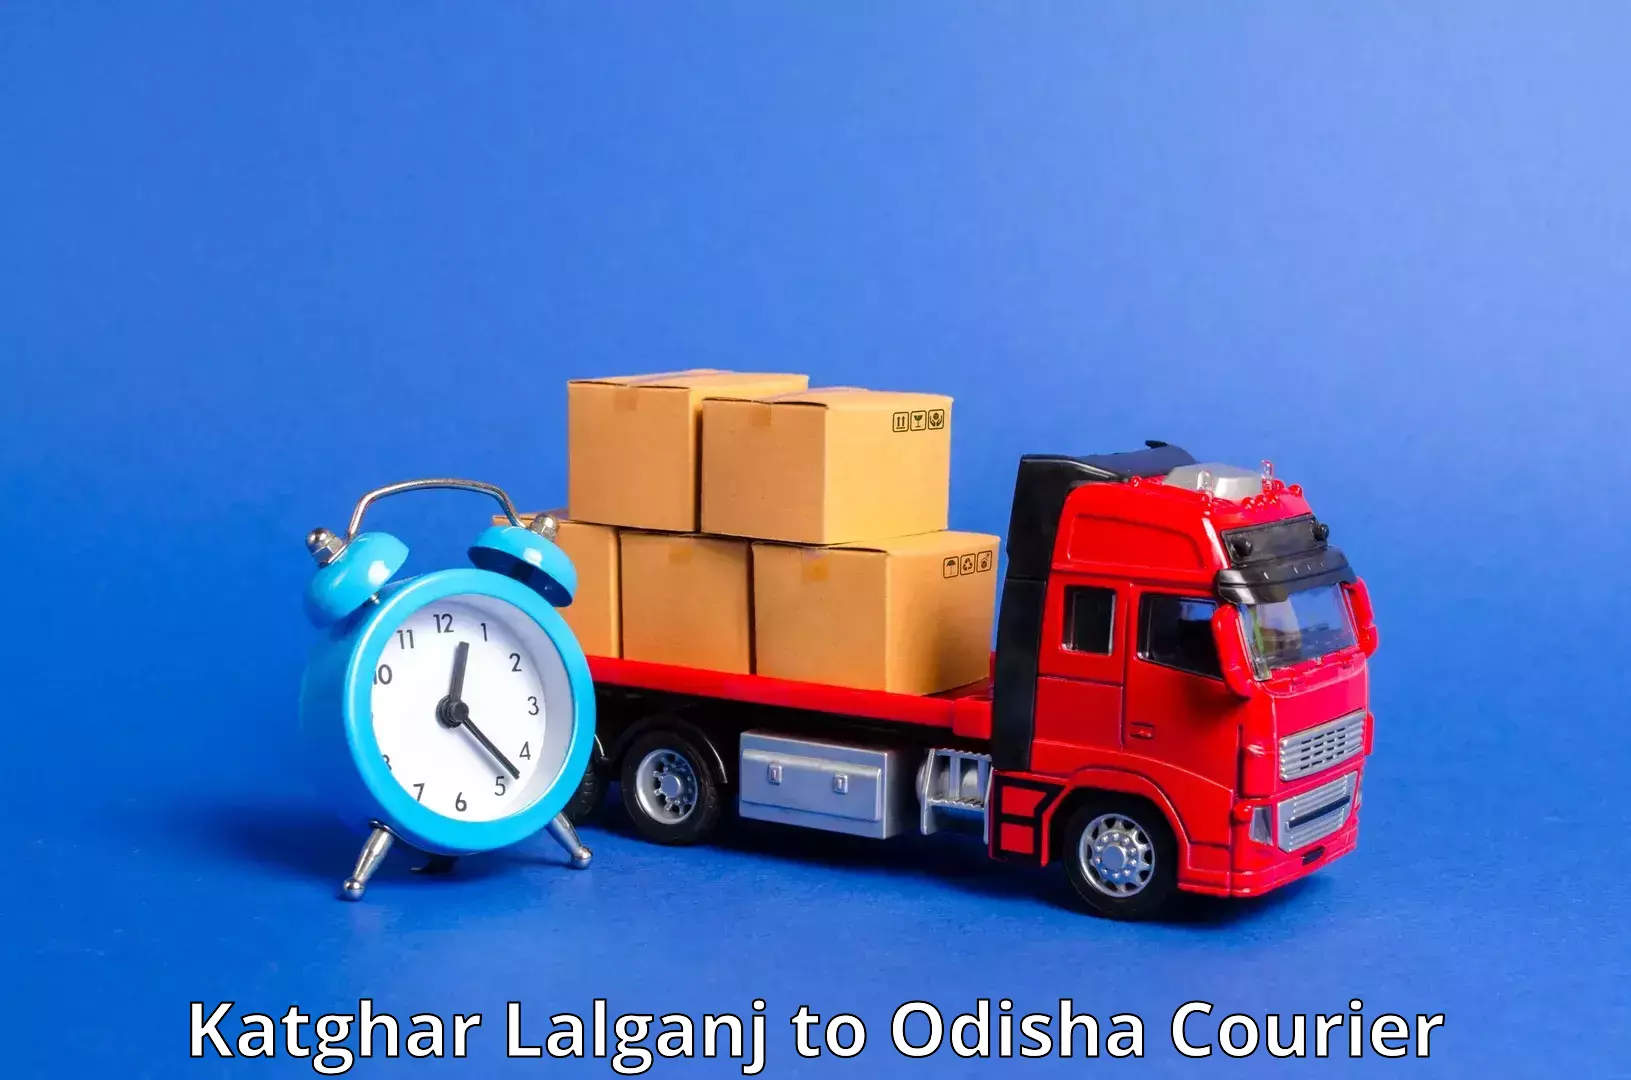 Express delivery capabilities Katghar Lalganj to Bheden